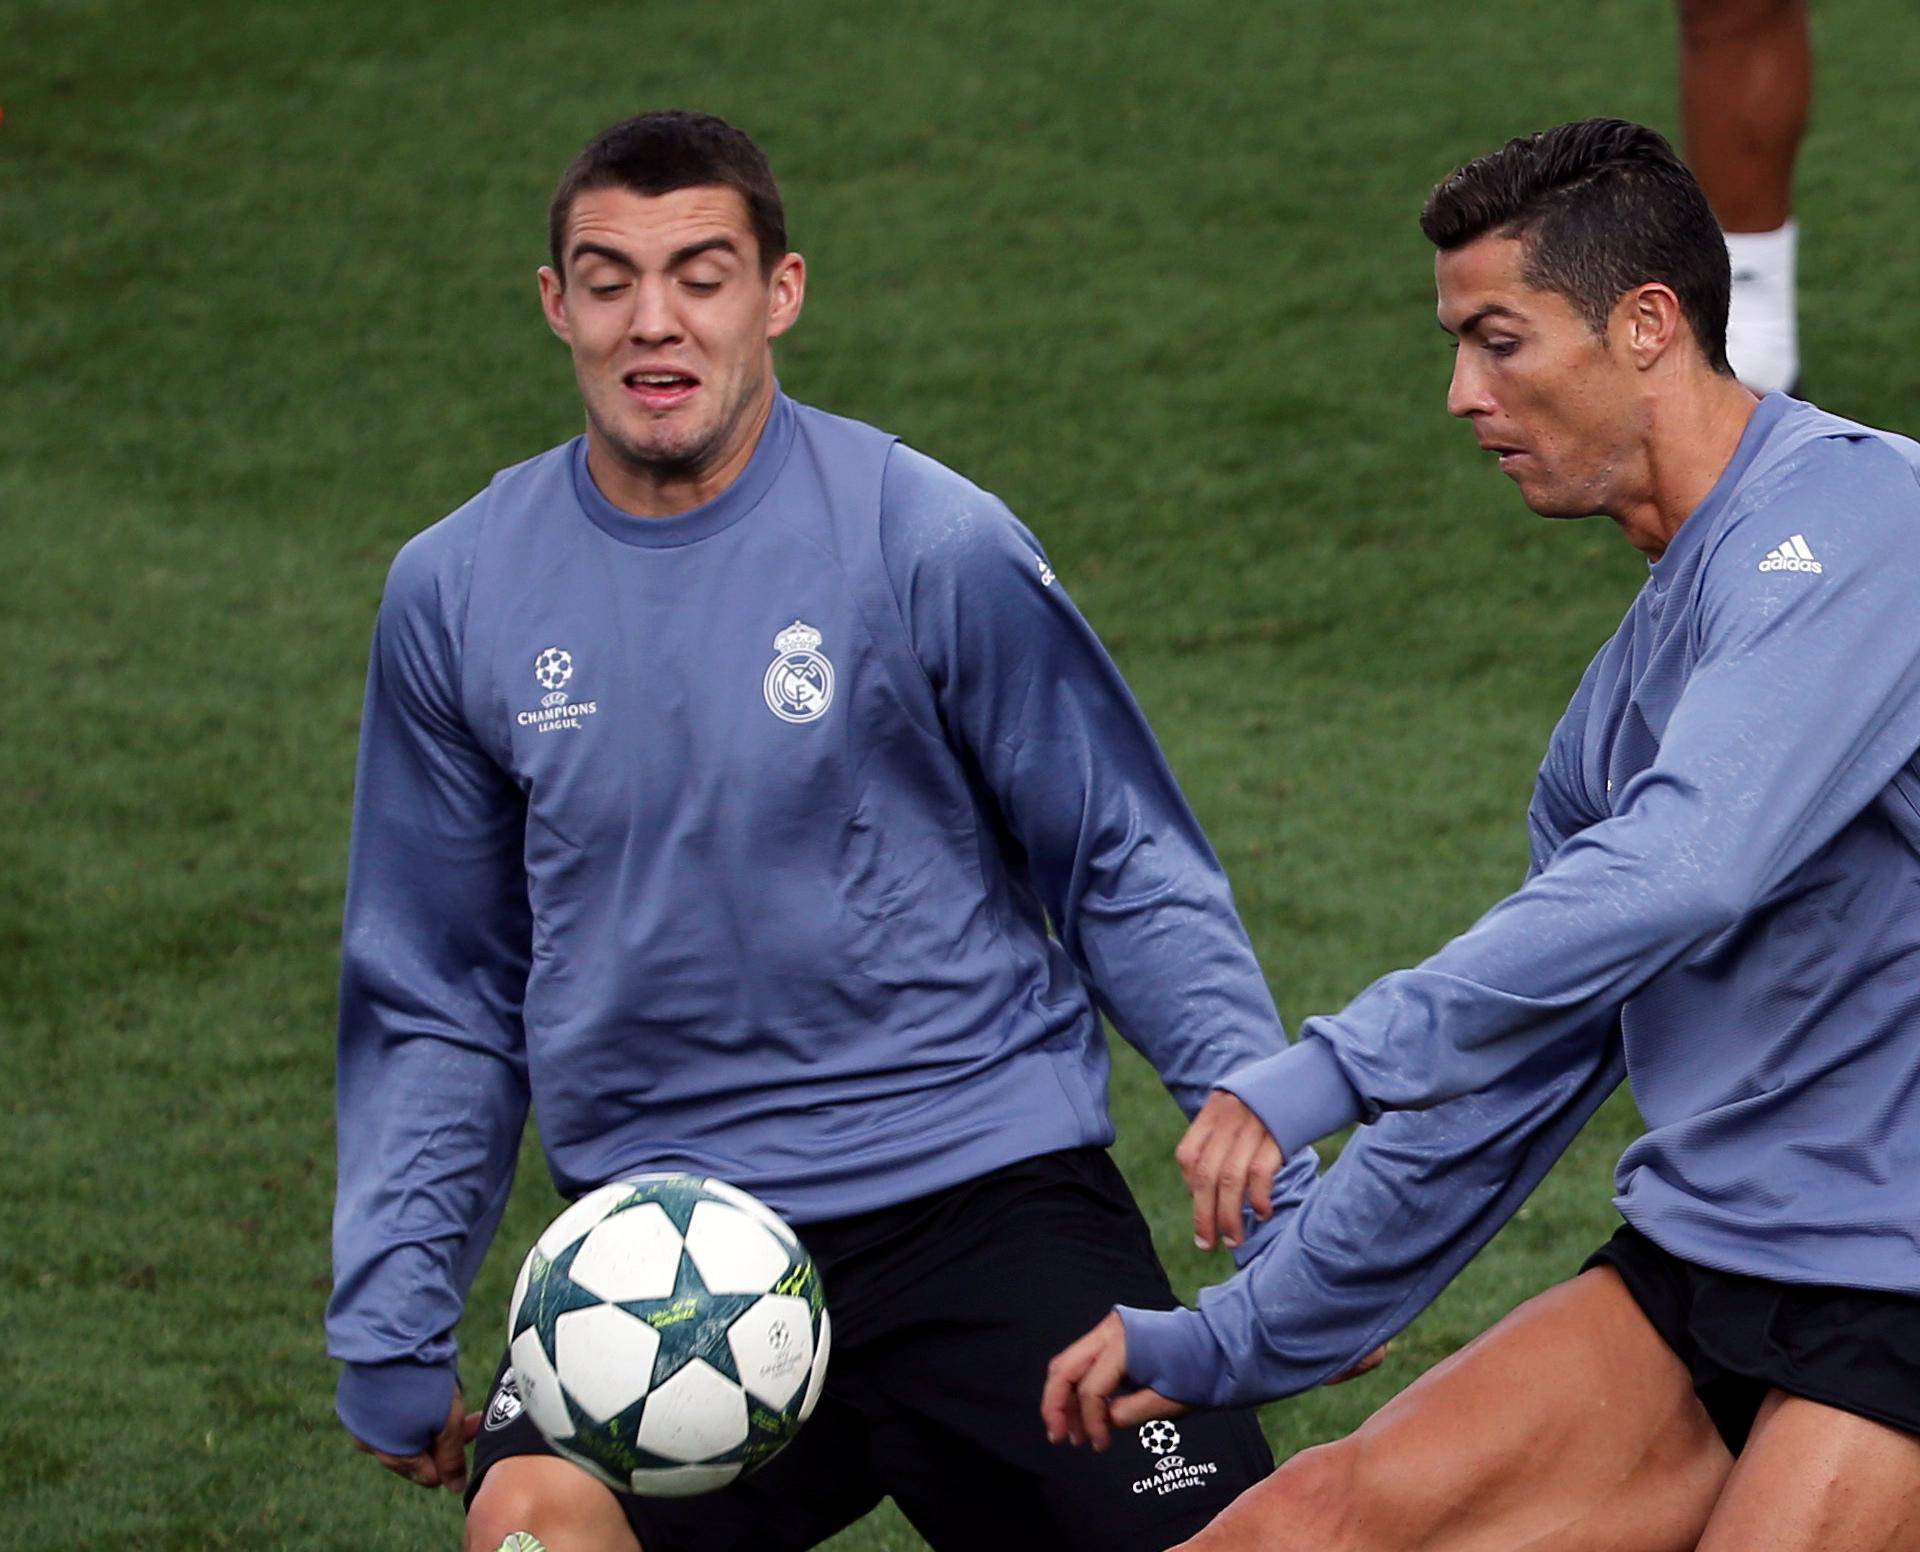 Football Soccer - Real Madrid training - Champions League